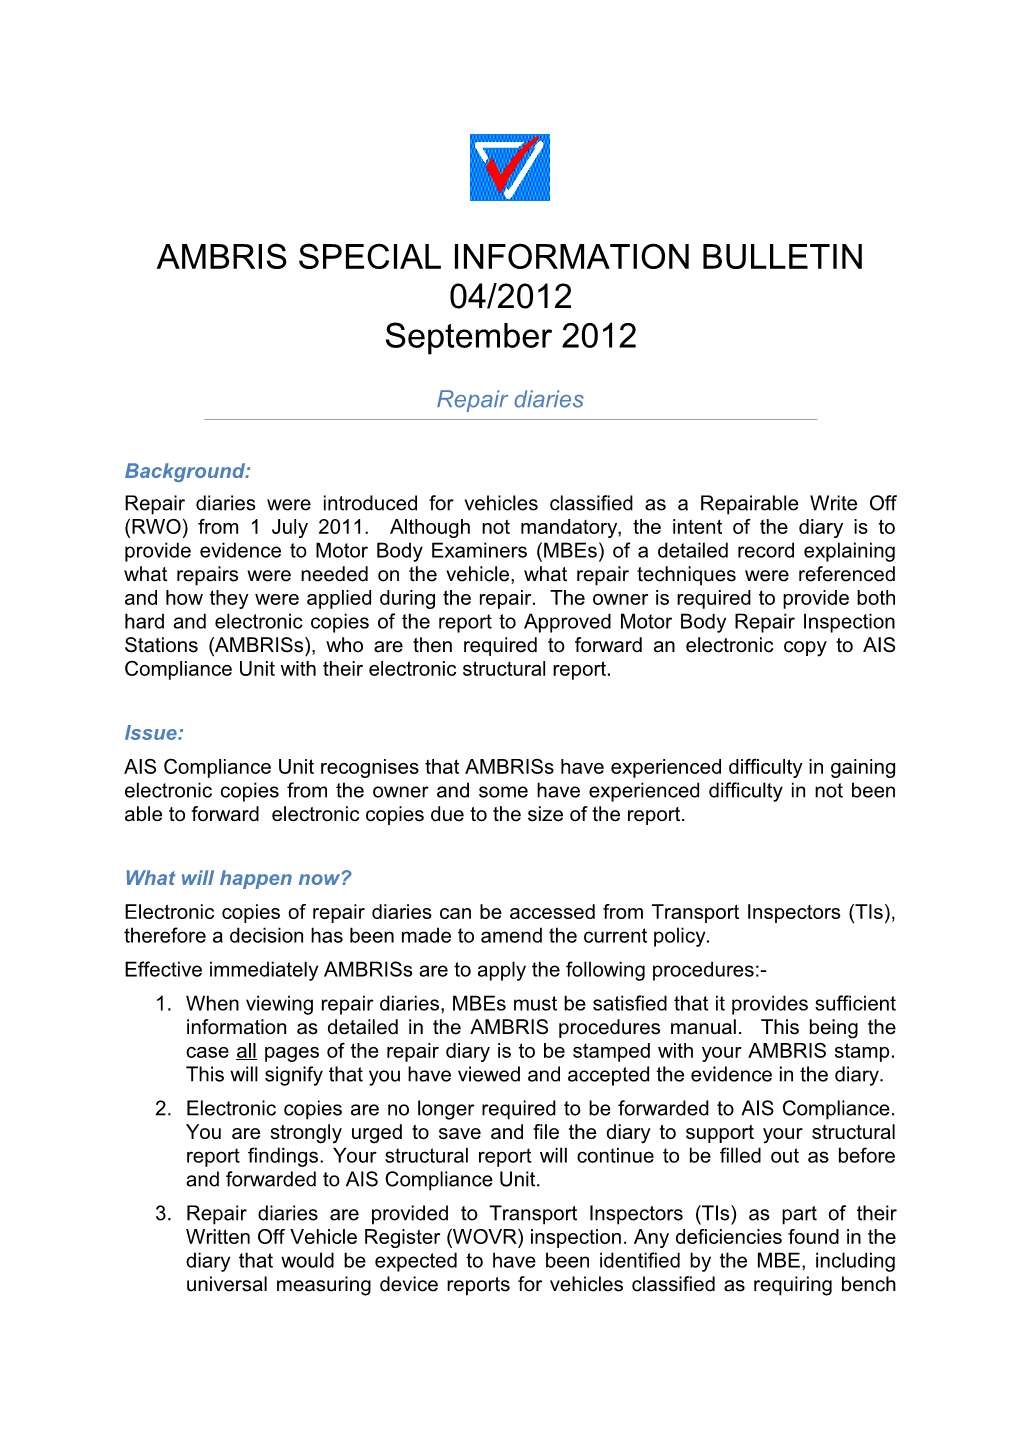 Ambris Special Information Bulletin